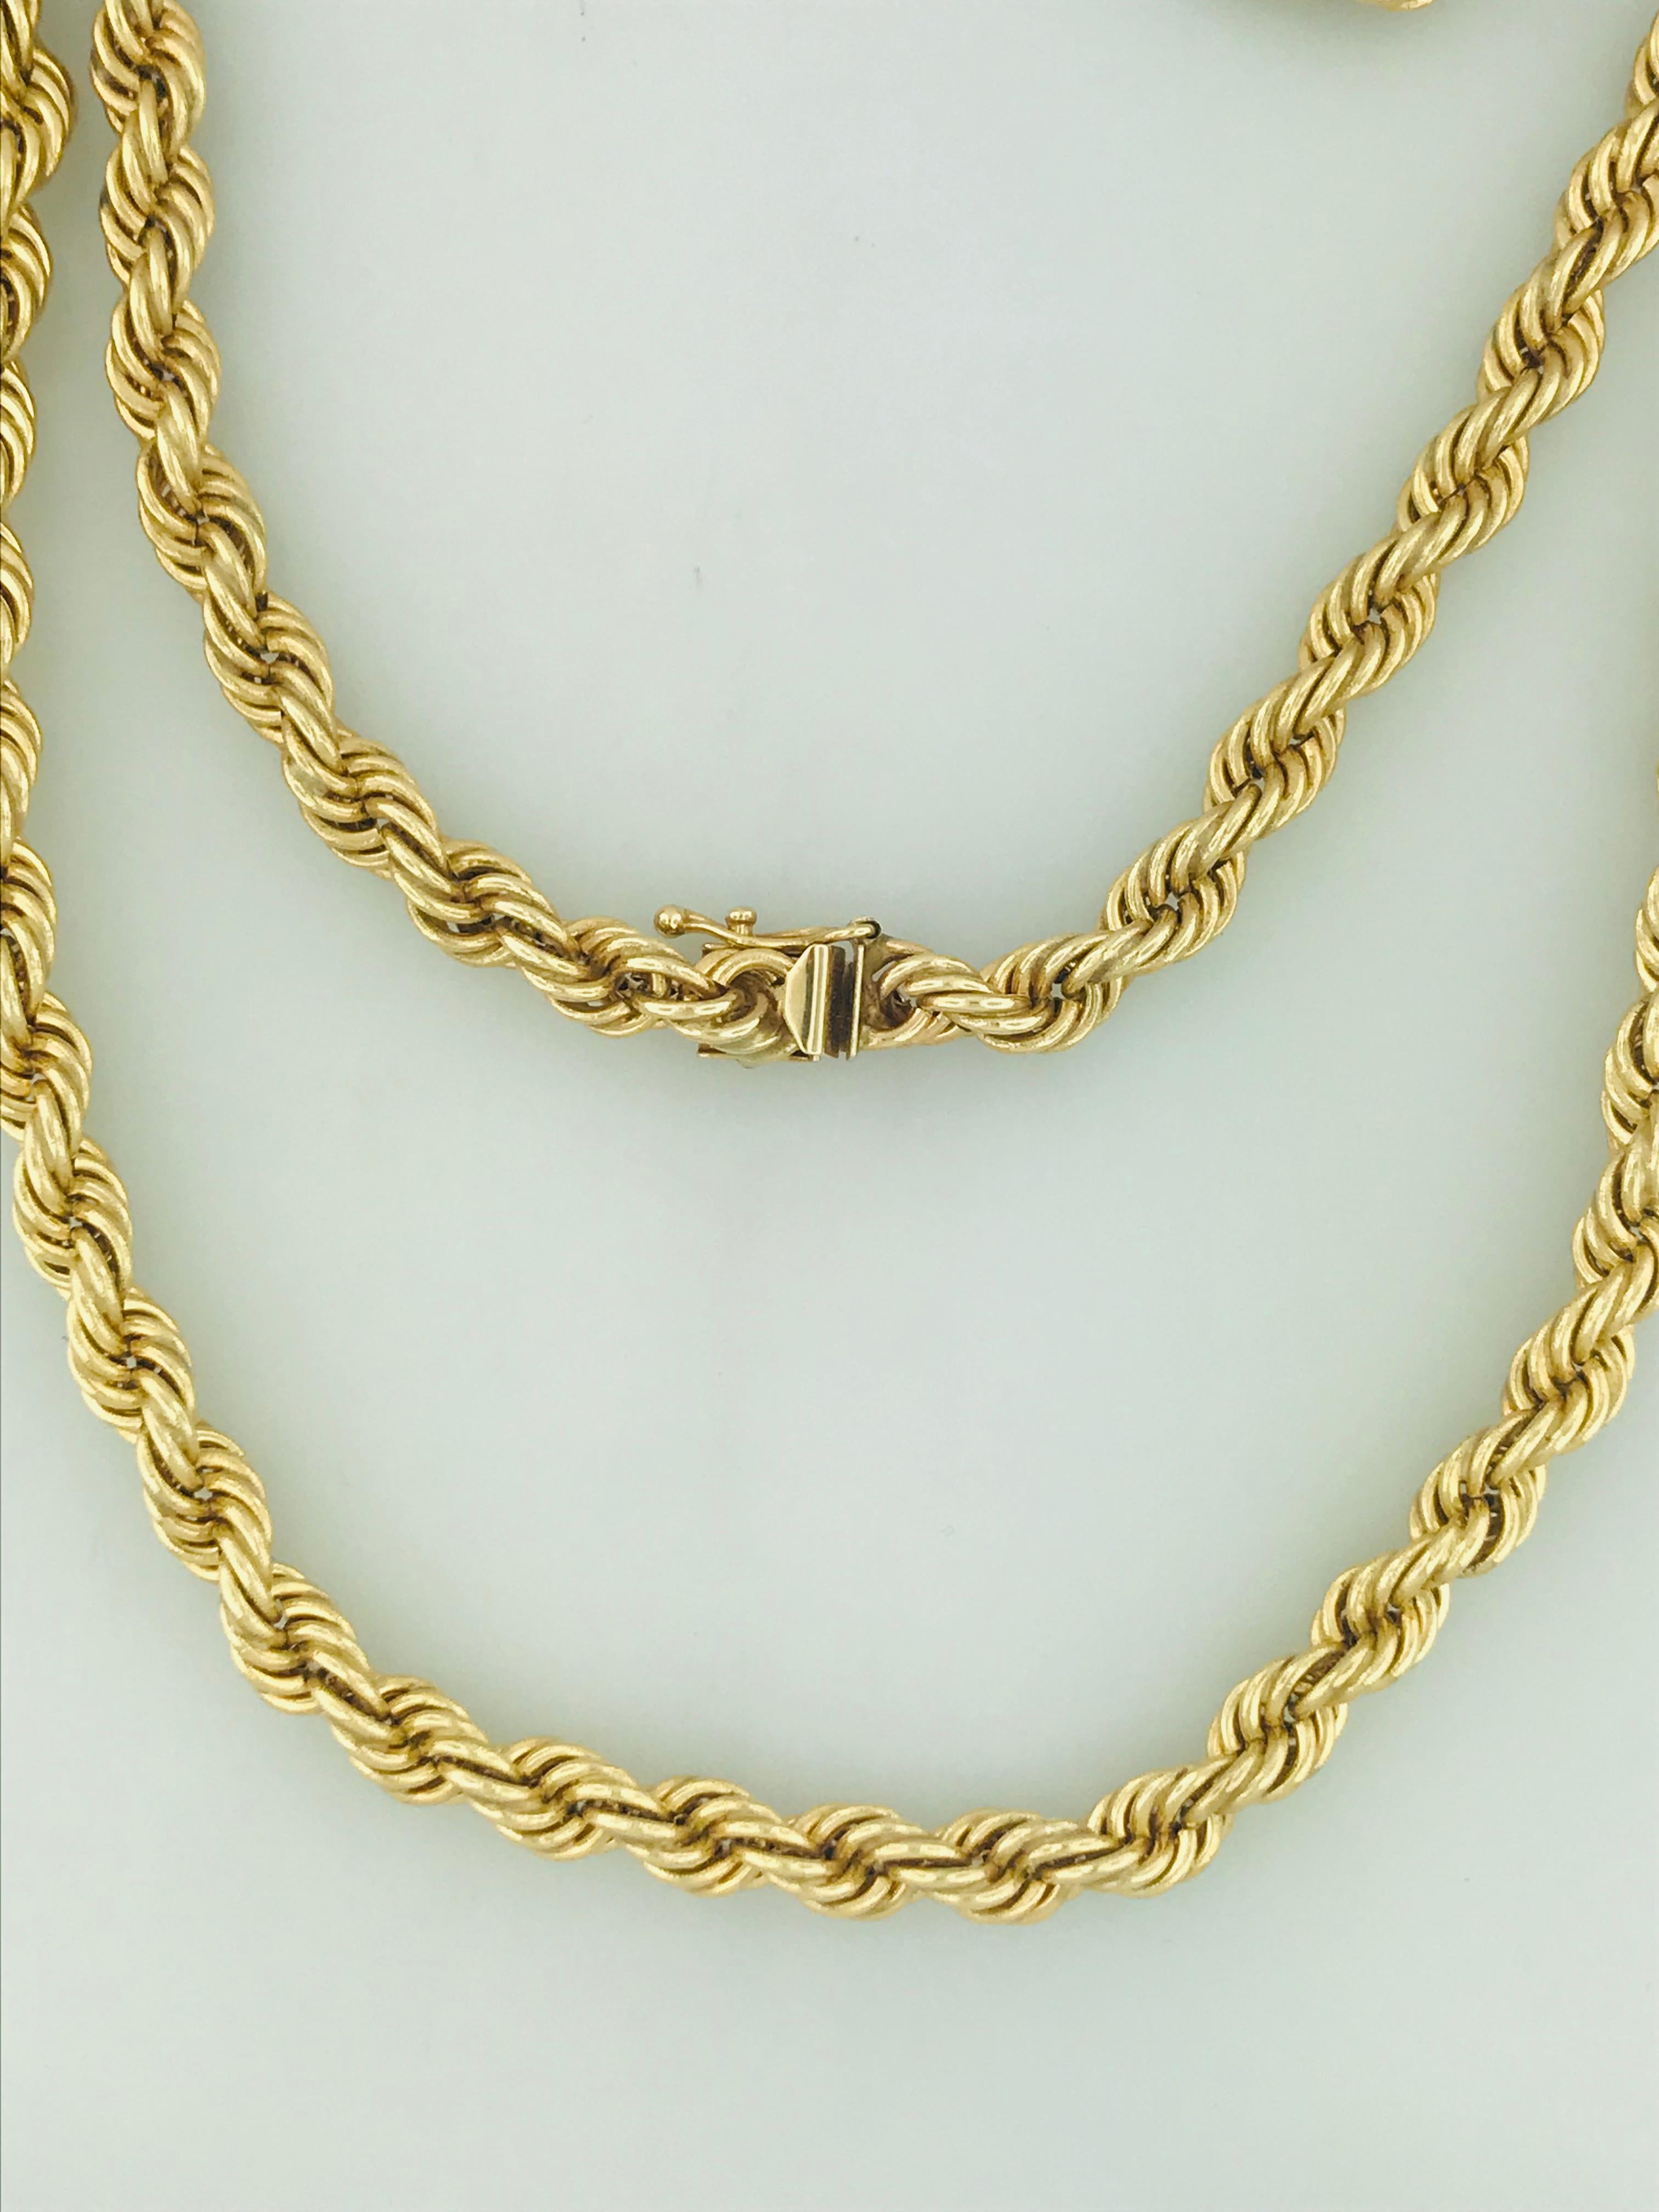 14 karat gold rope chain